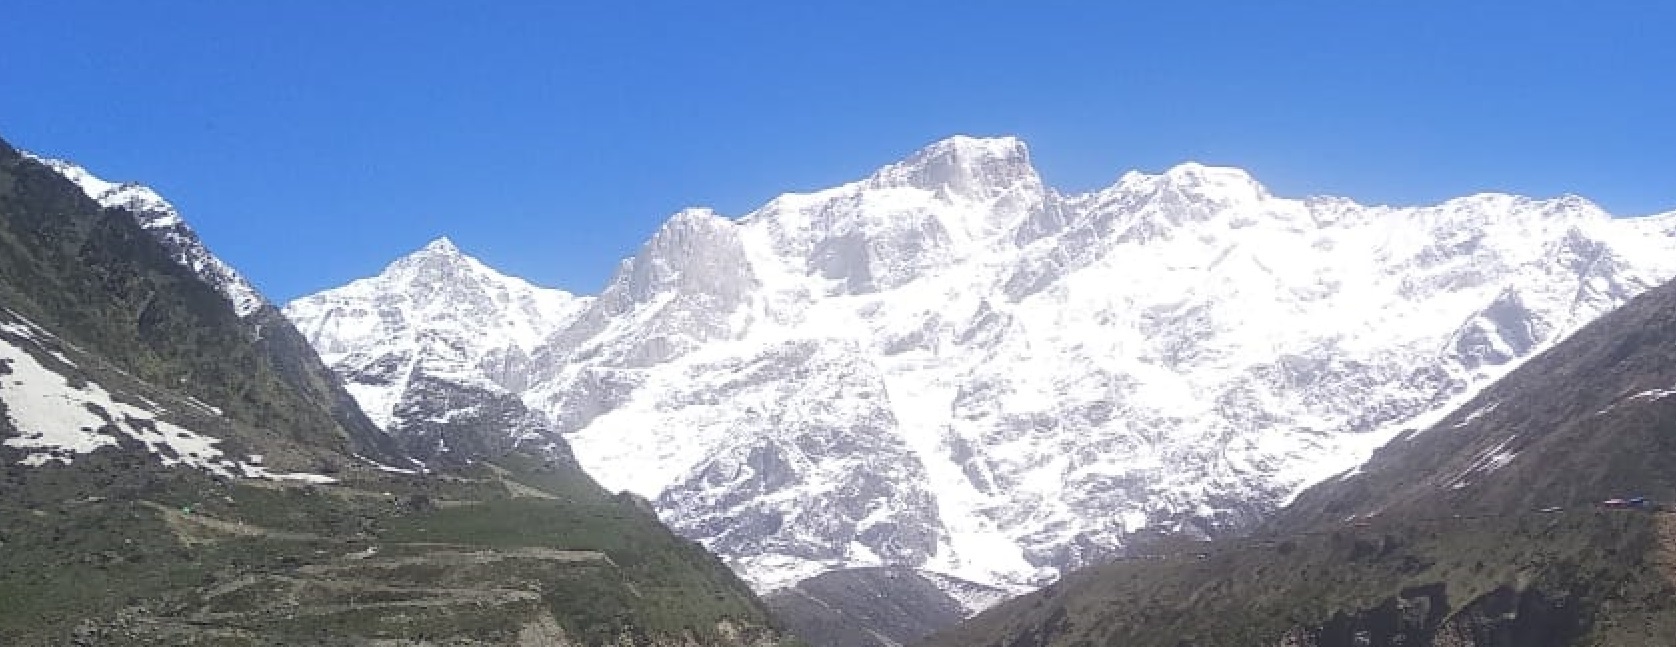 Solang Valley Manali Tour, Himachal Pradesh